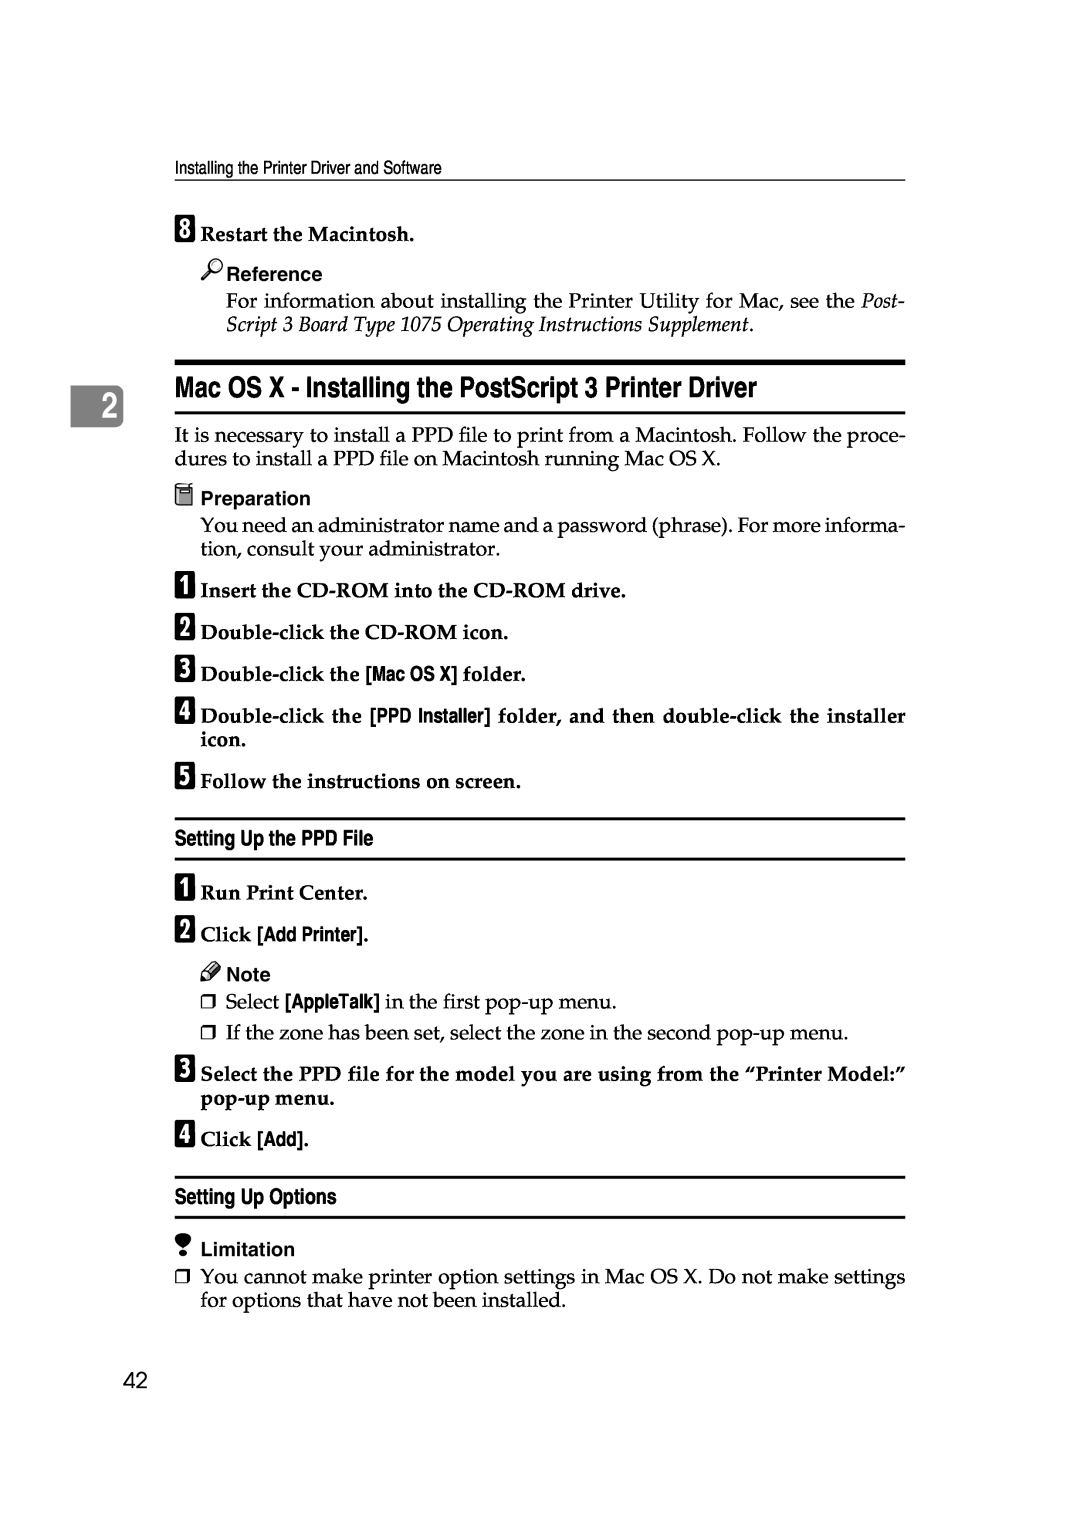 Xerox 1075 manual Mac OS X - Installing the PostScript 3 Printer Driver, Setting Up Options, B Click Add Printer, Reference 